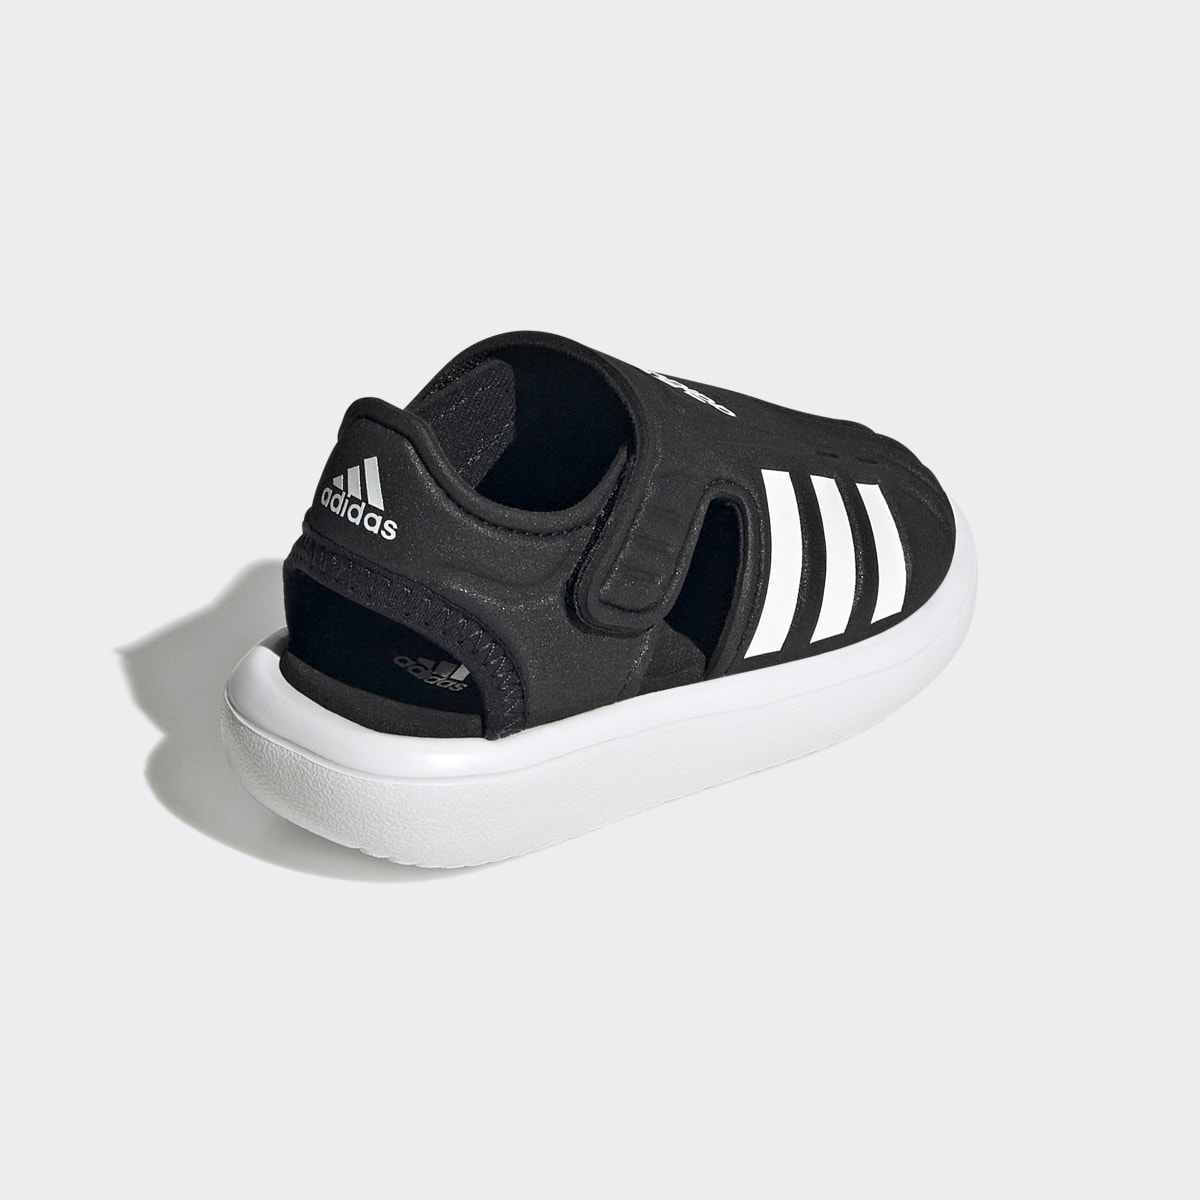 Adidas Closed-Toe Summer Water Sandals. 6